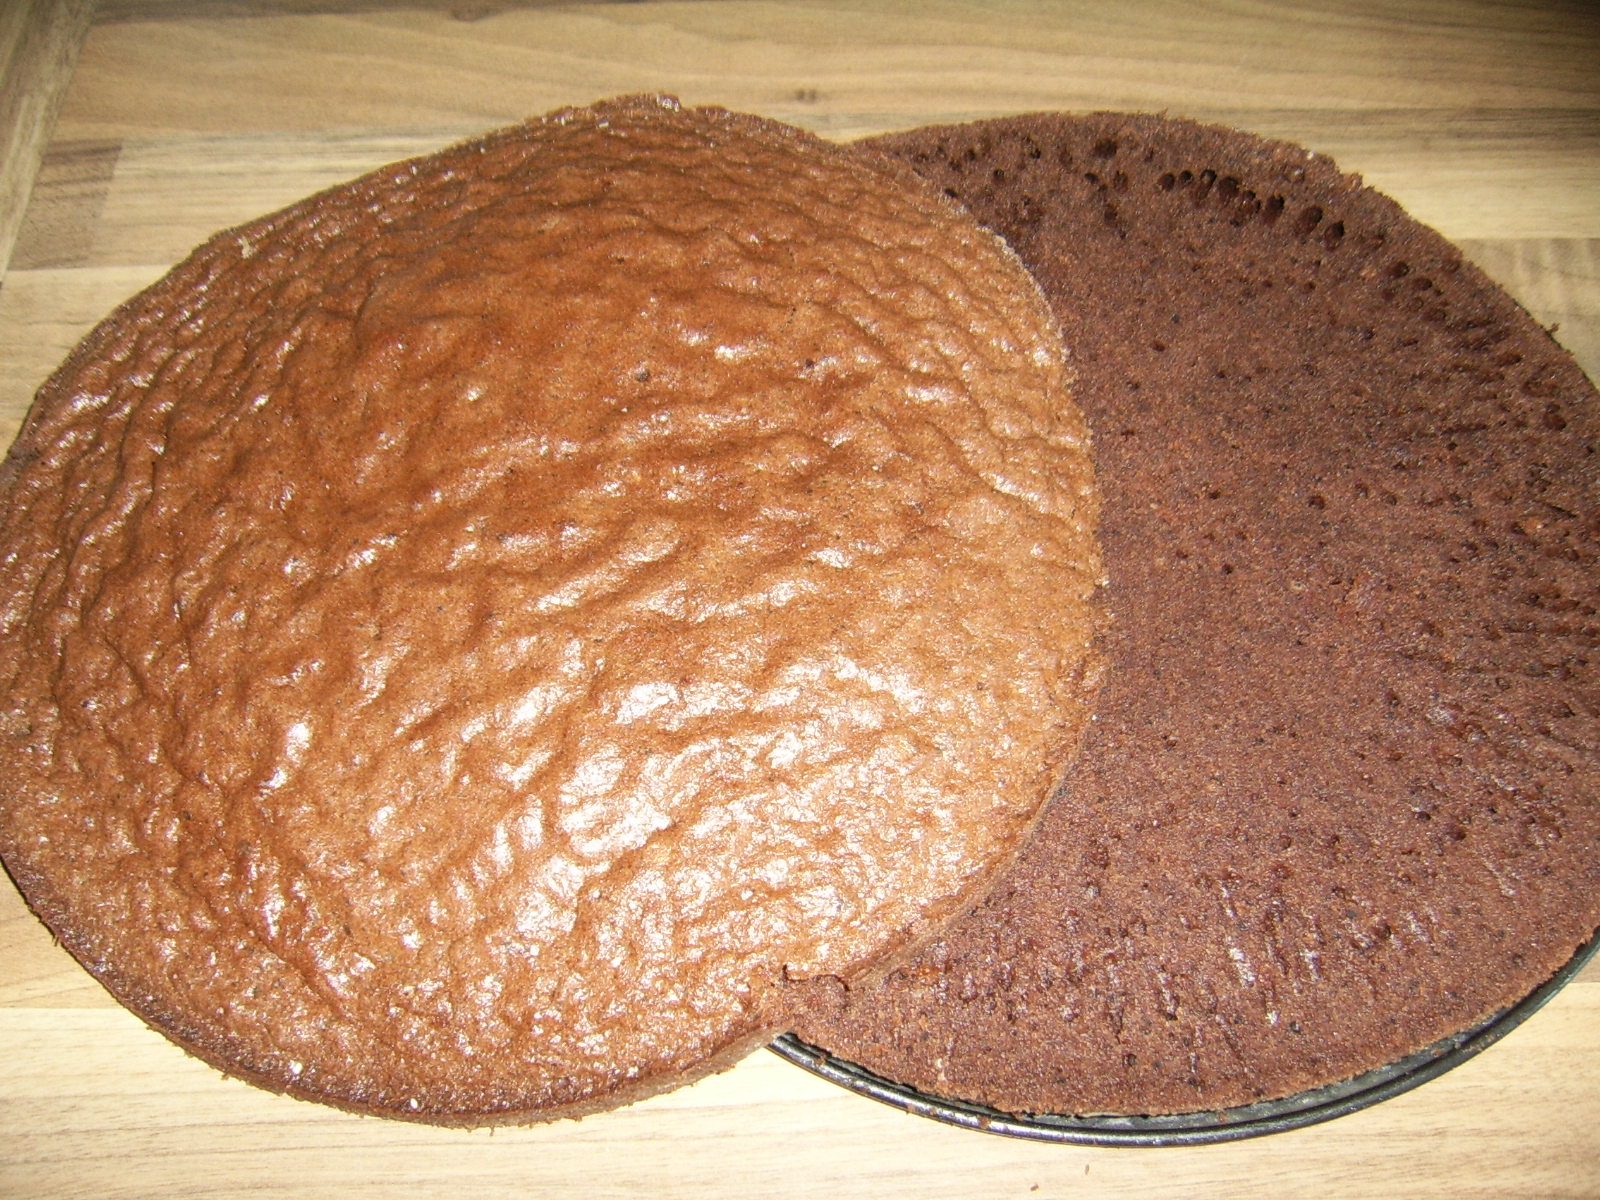 Triple chocolate cake